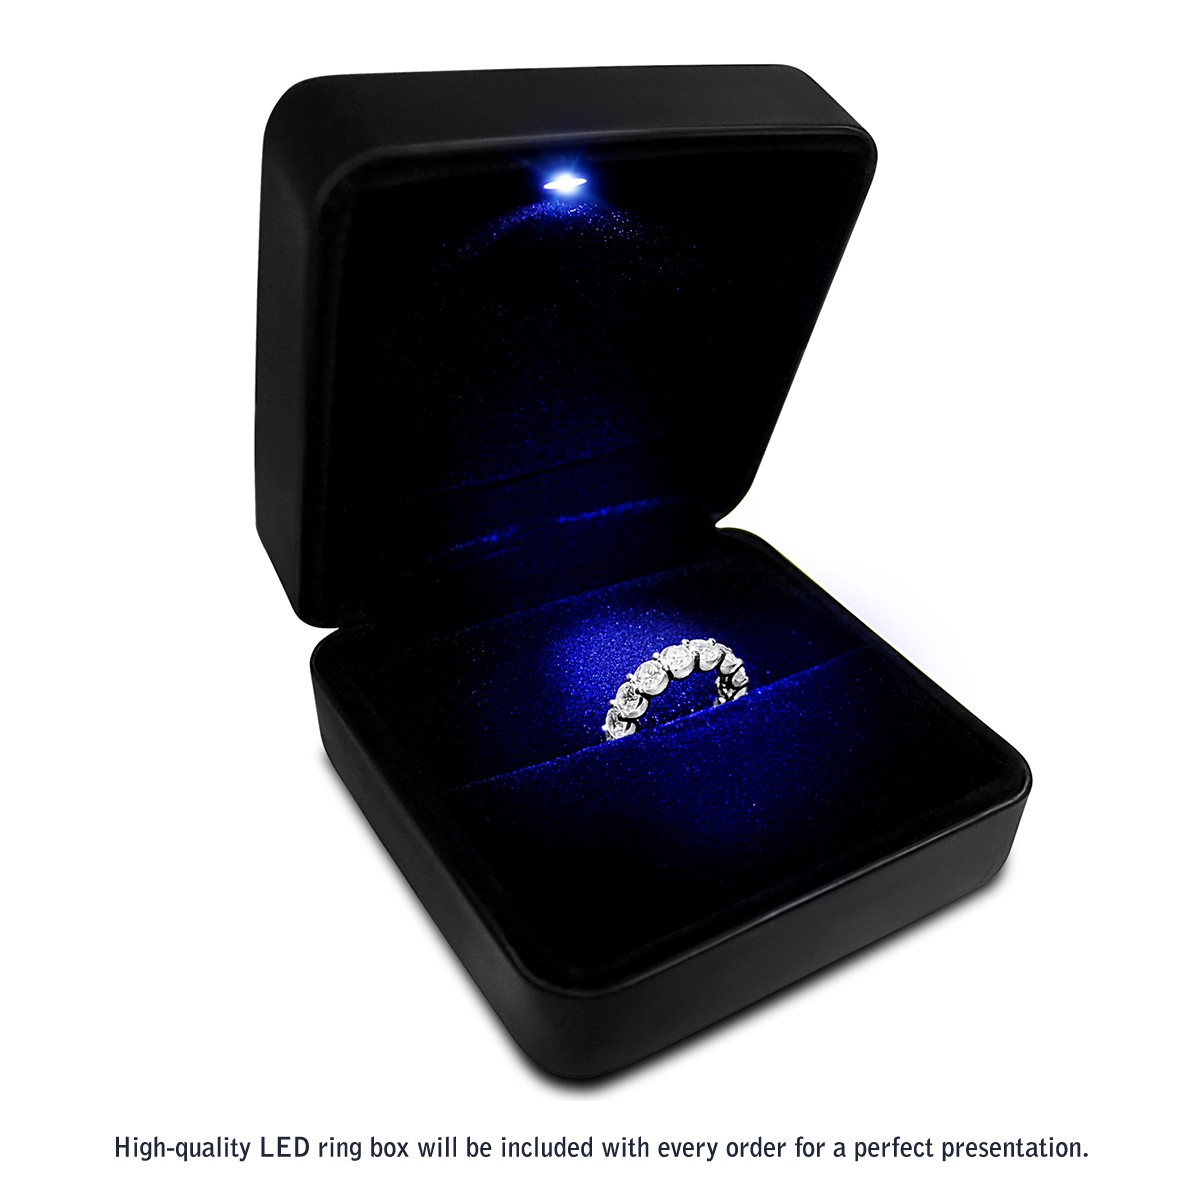 Eternity Ring with Prong Set Asscher Cut Diamonds in Platinum